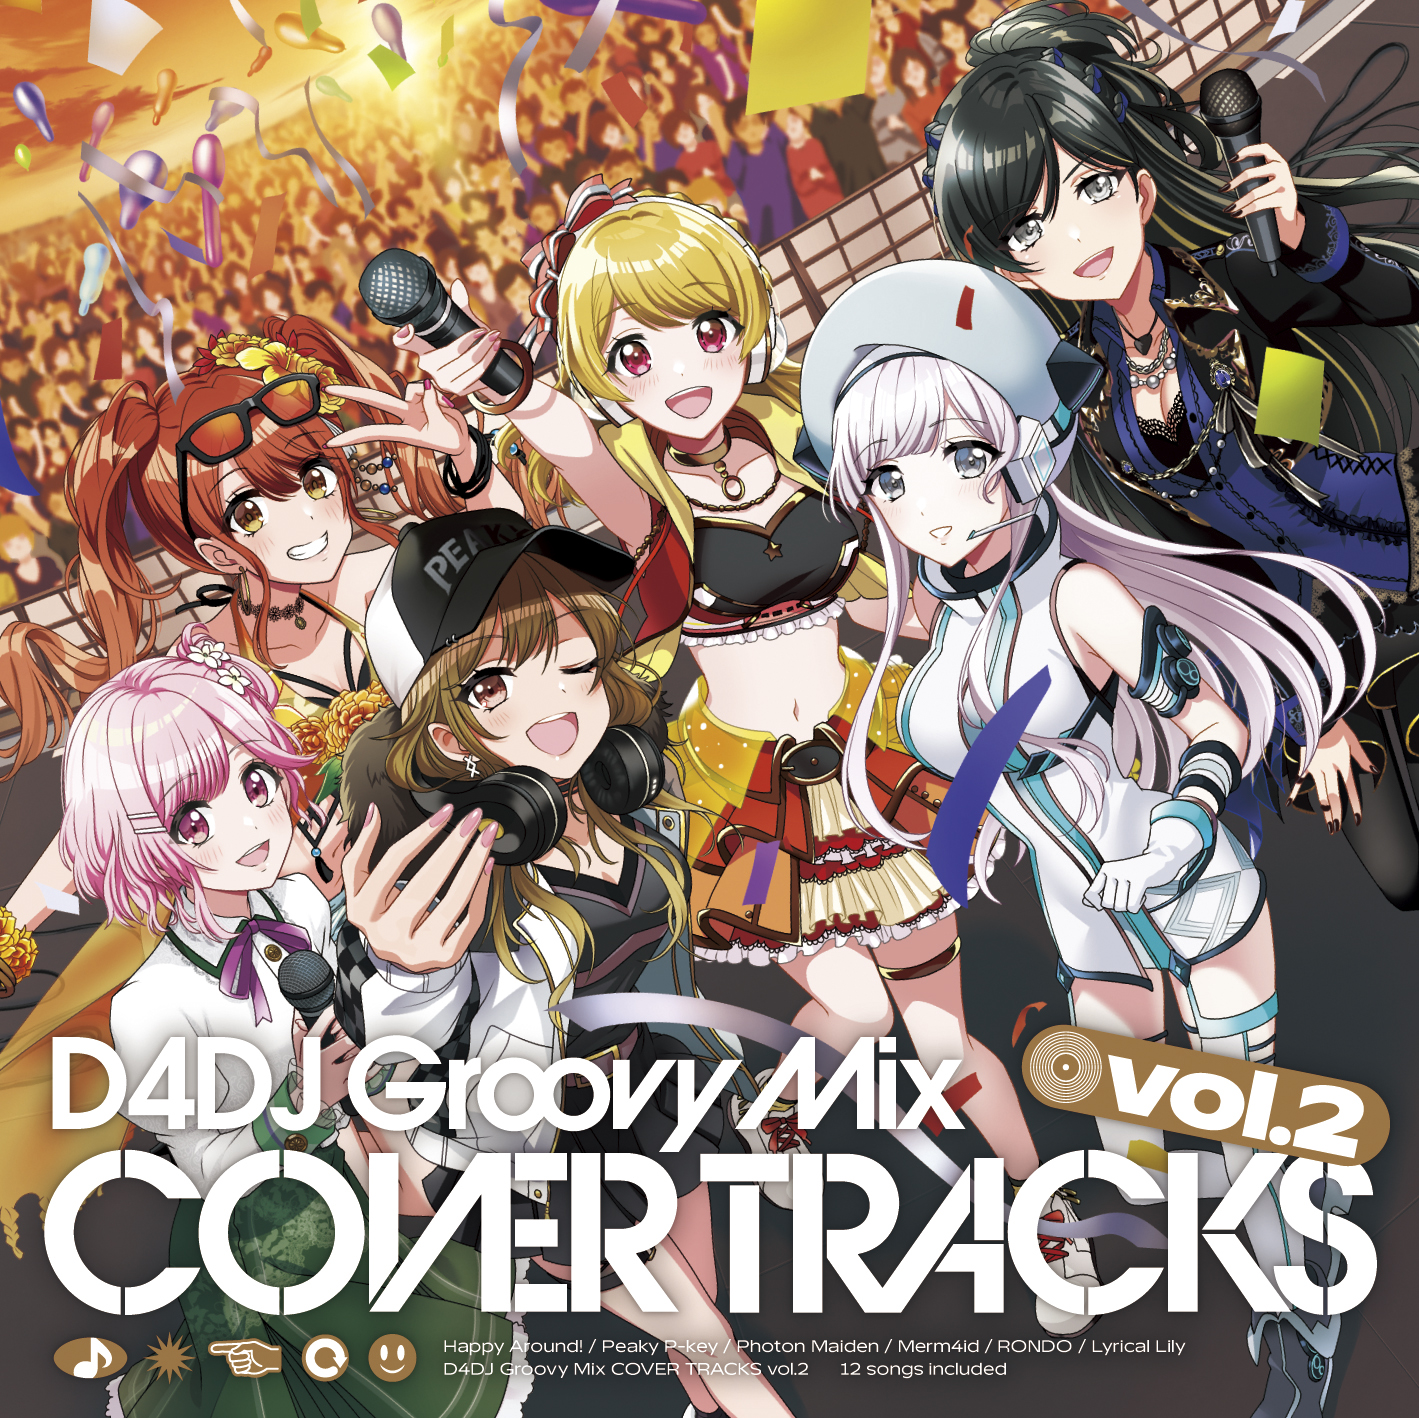 D4DJ Groovy Mix Cover Tracks Vol.2, Dig Delight Direct Drive DJ Wiki